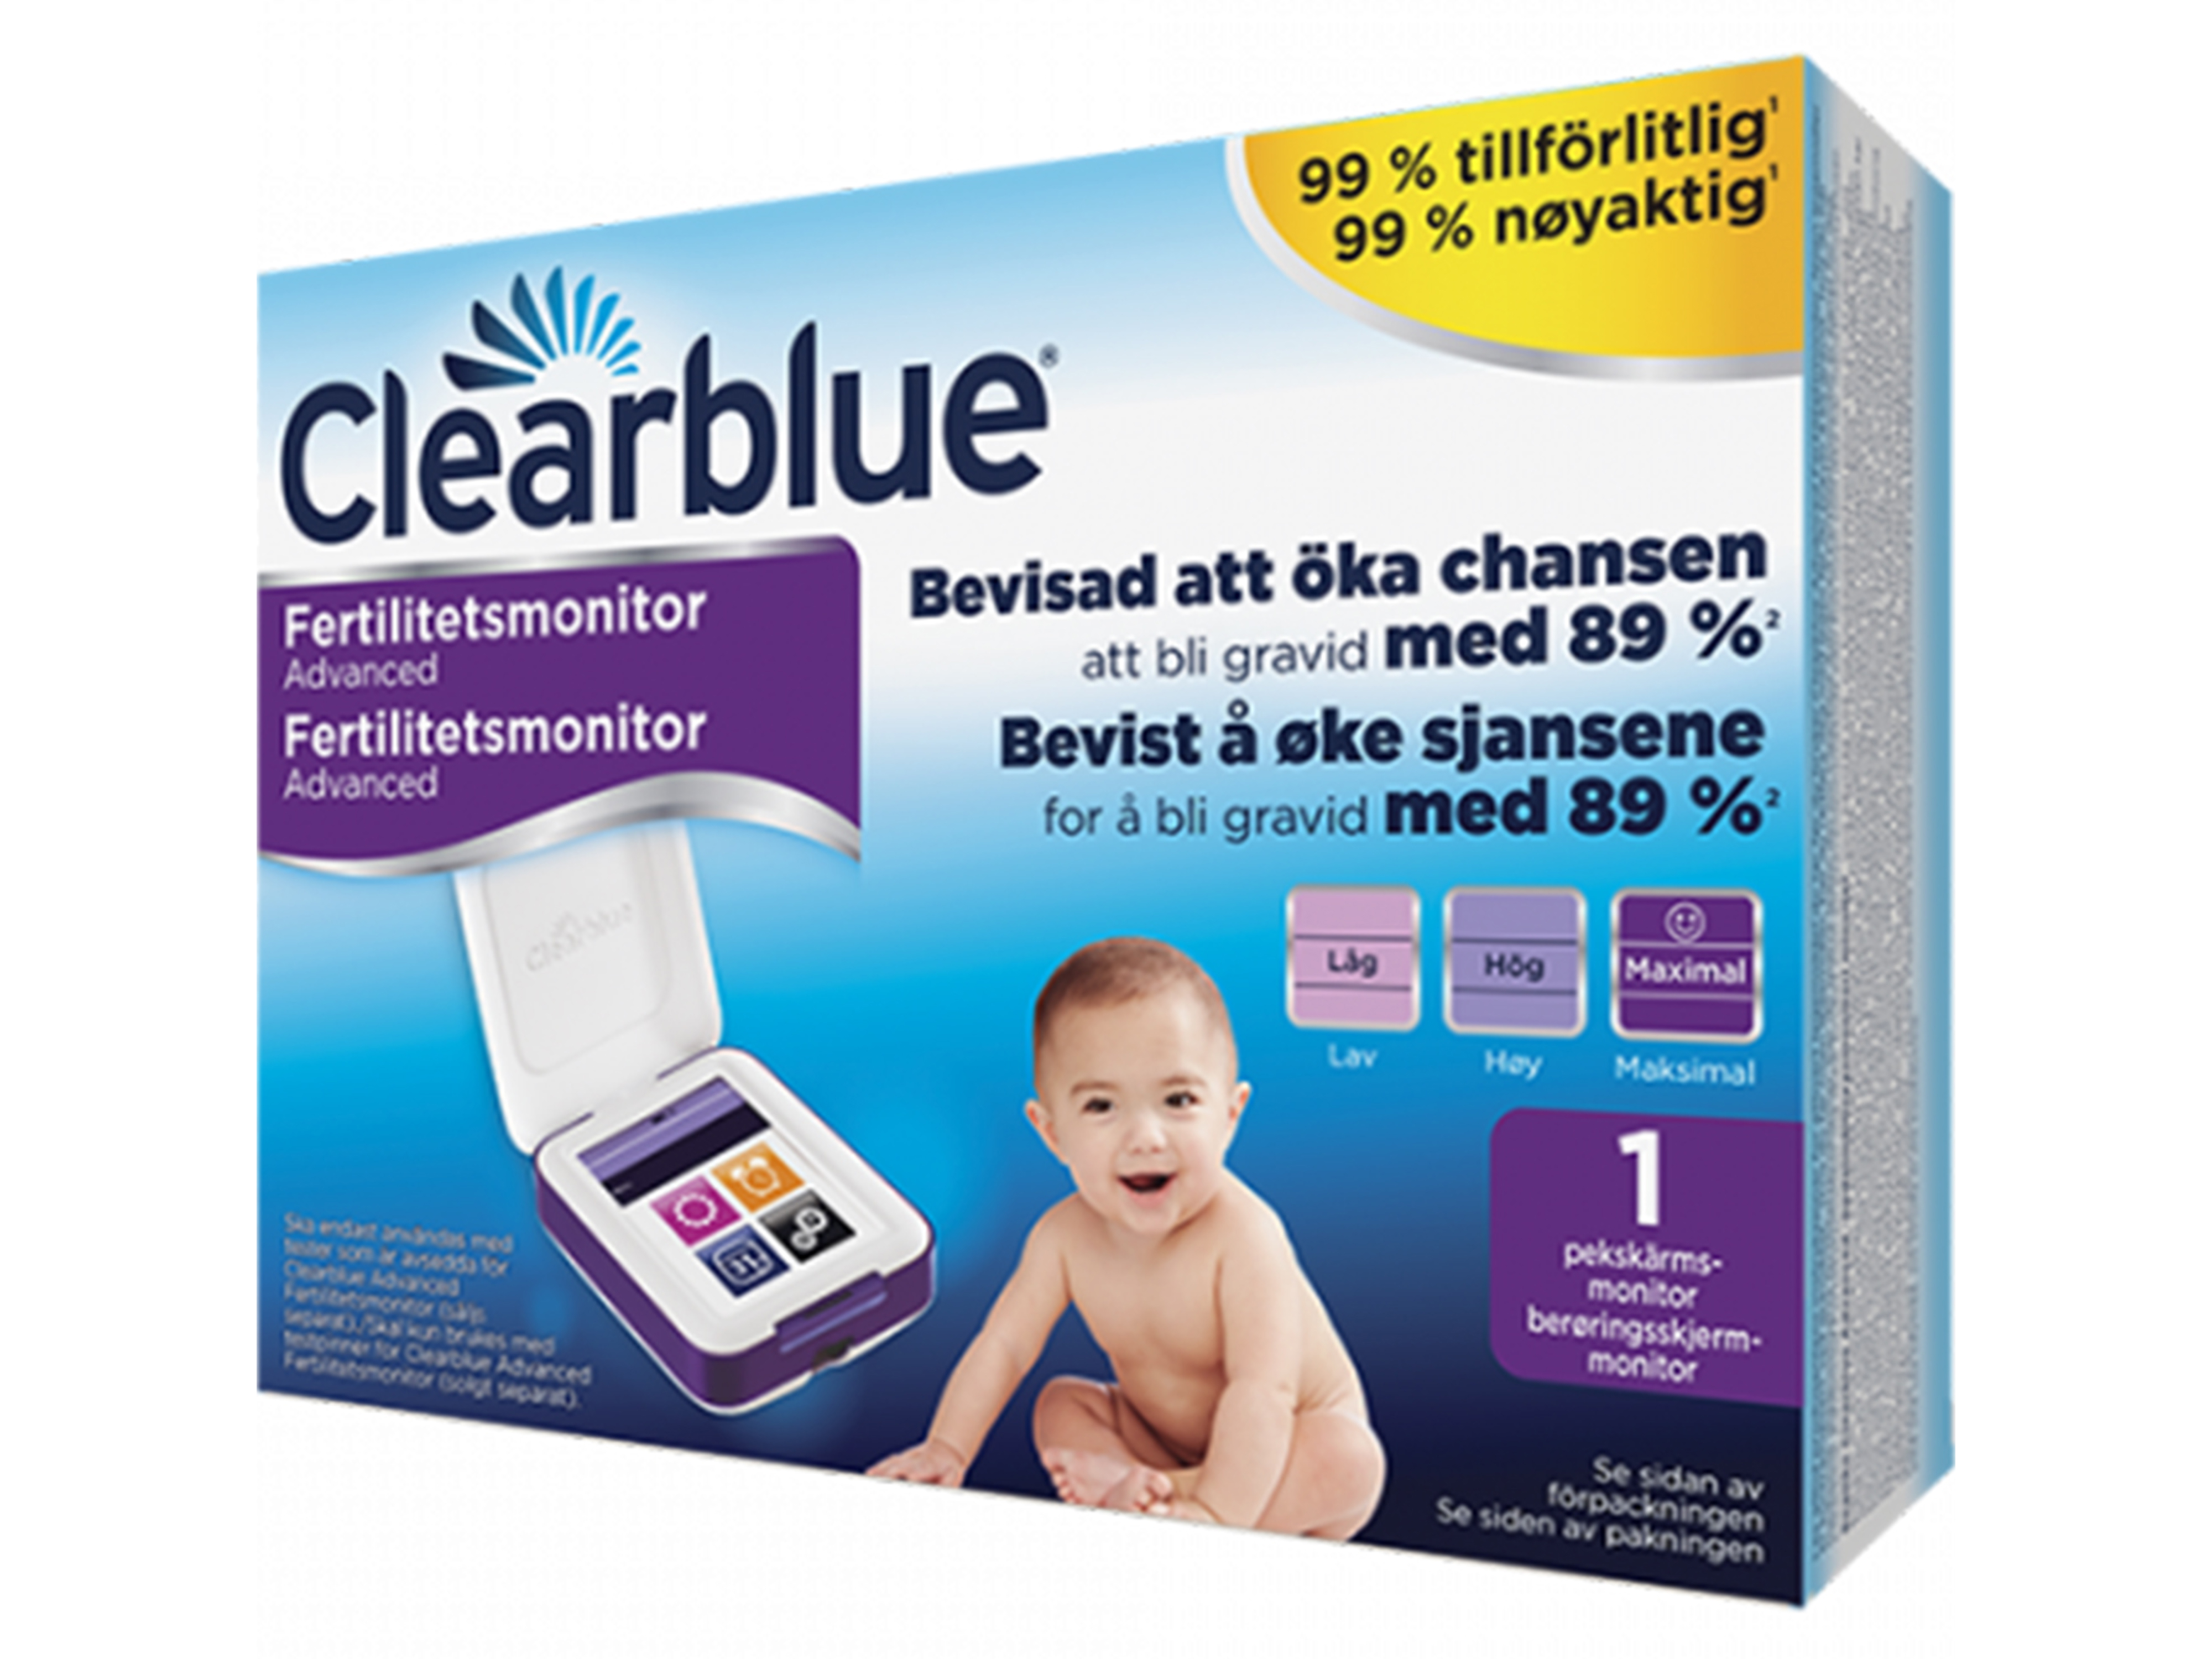 Clearblue Fertility monitor 1.1, 1 stk.